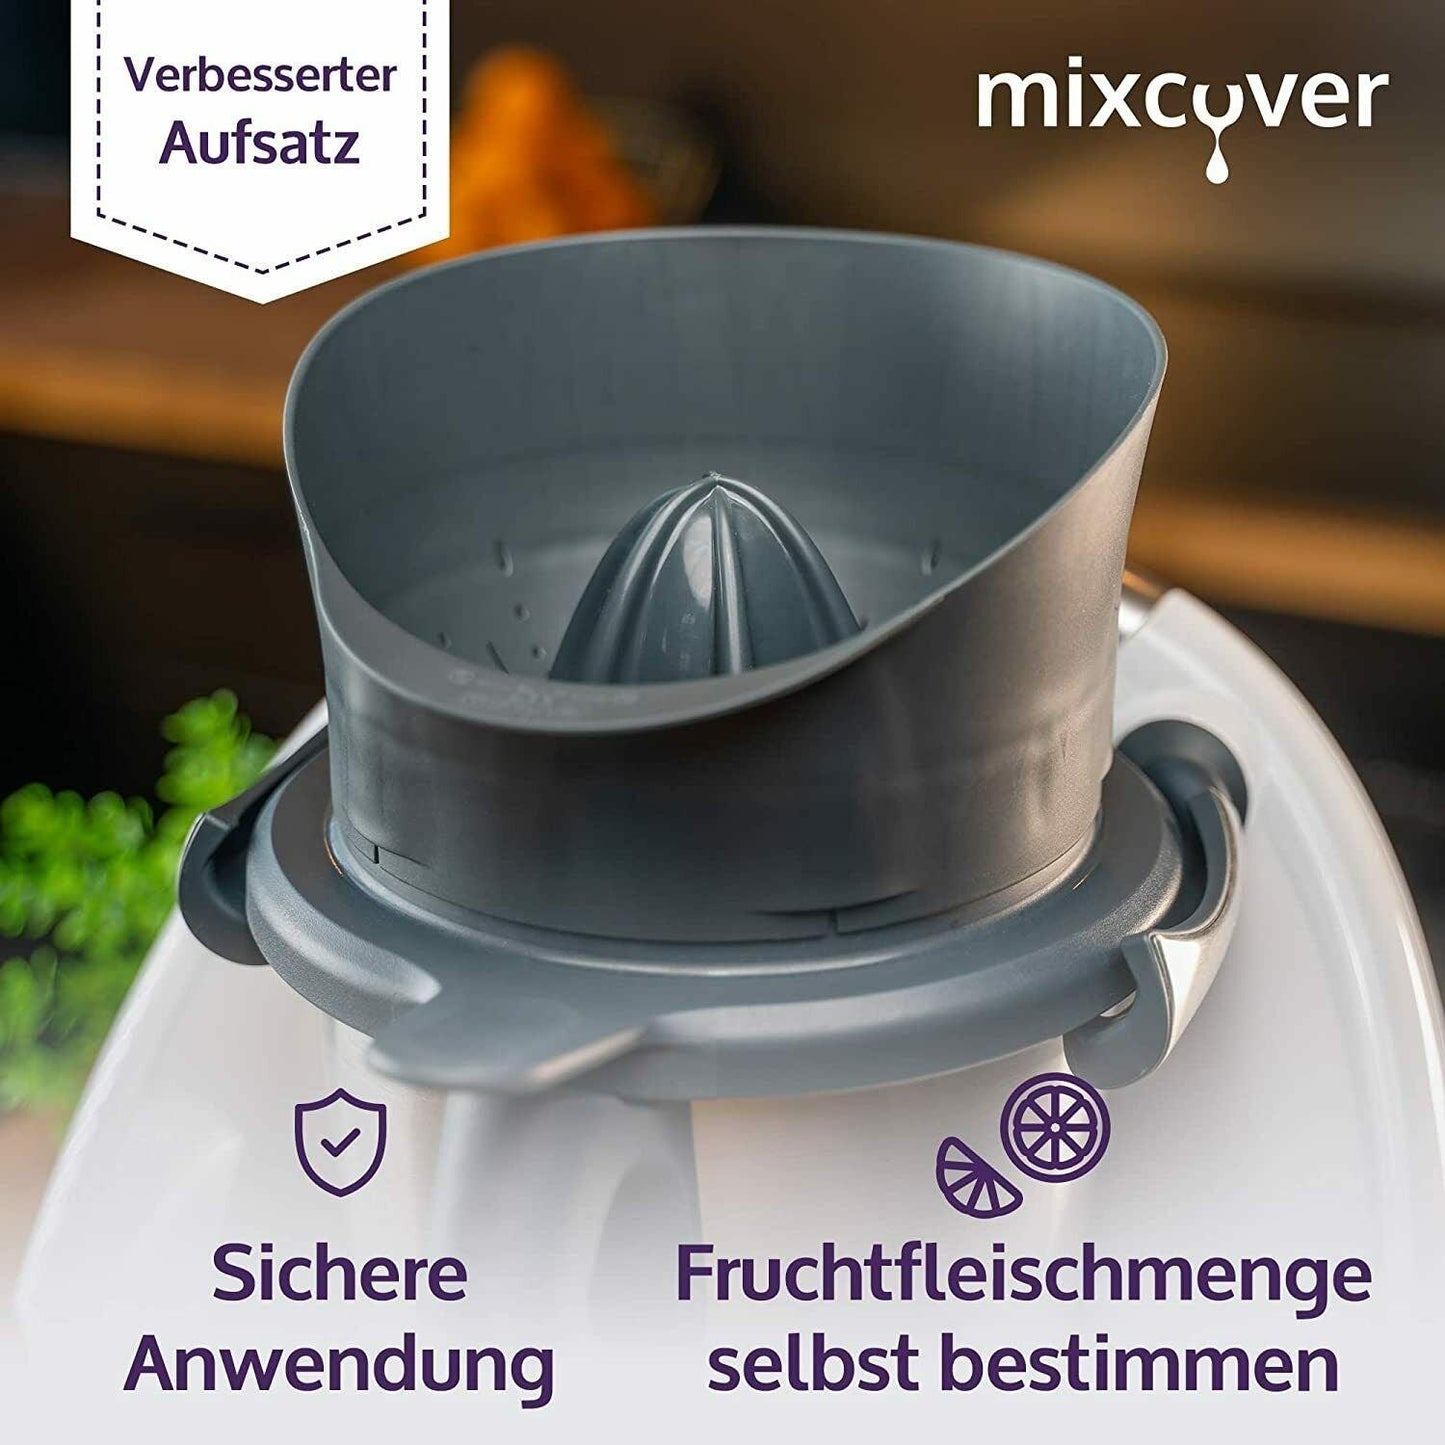 mixcover verbesserte Saftpresse/Zitruspresse für Thermomix TM6 & TM5, Entsafter - Mixcover - Mixcover